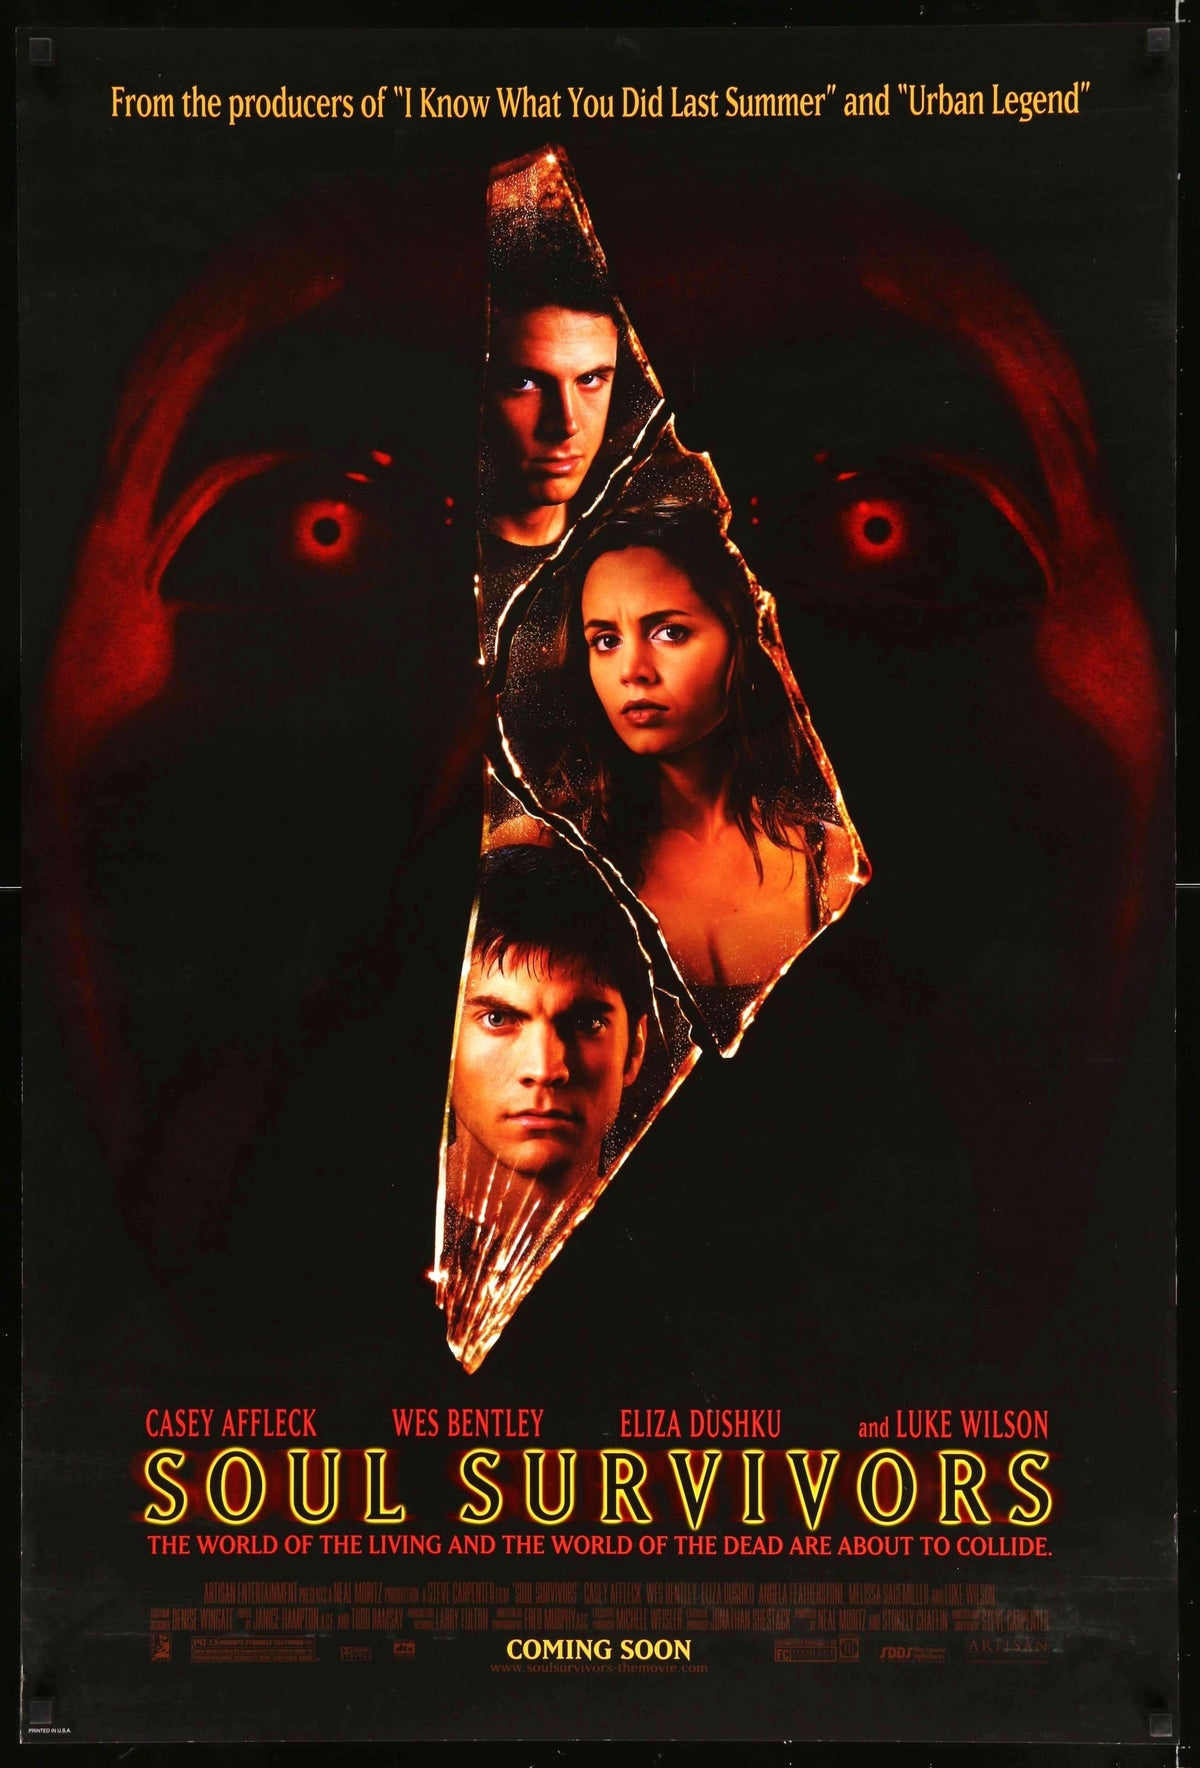 Soul Survivors (2001) original movie poster for sale at Original Film Art